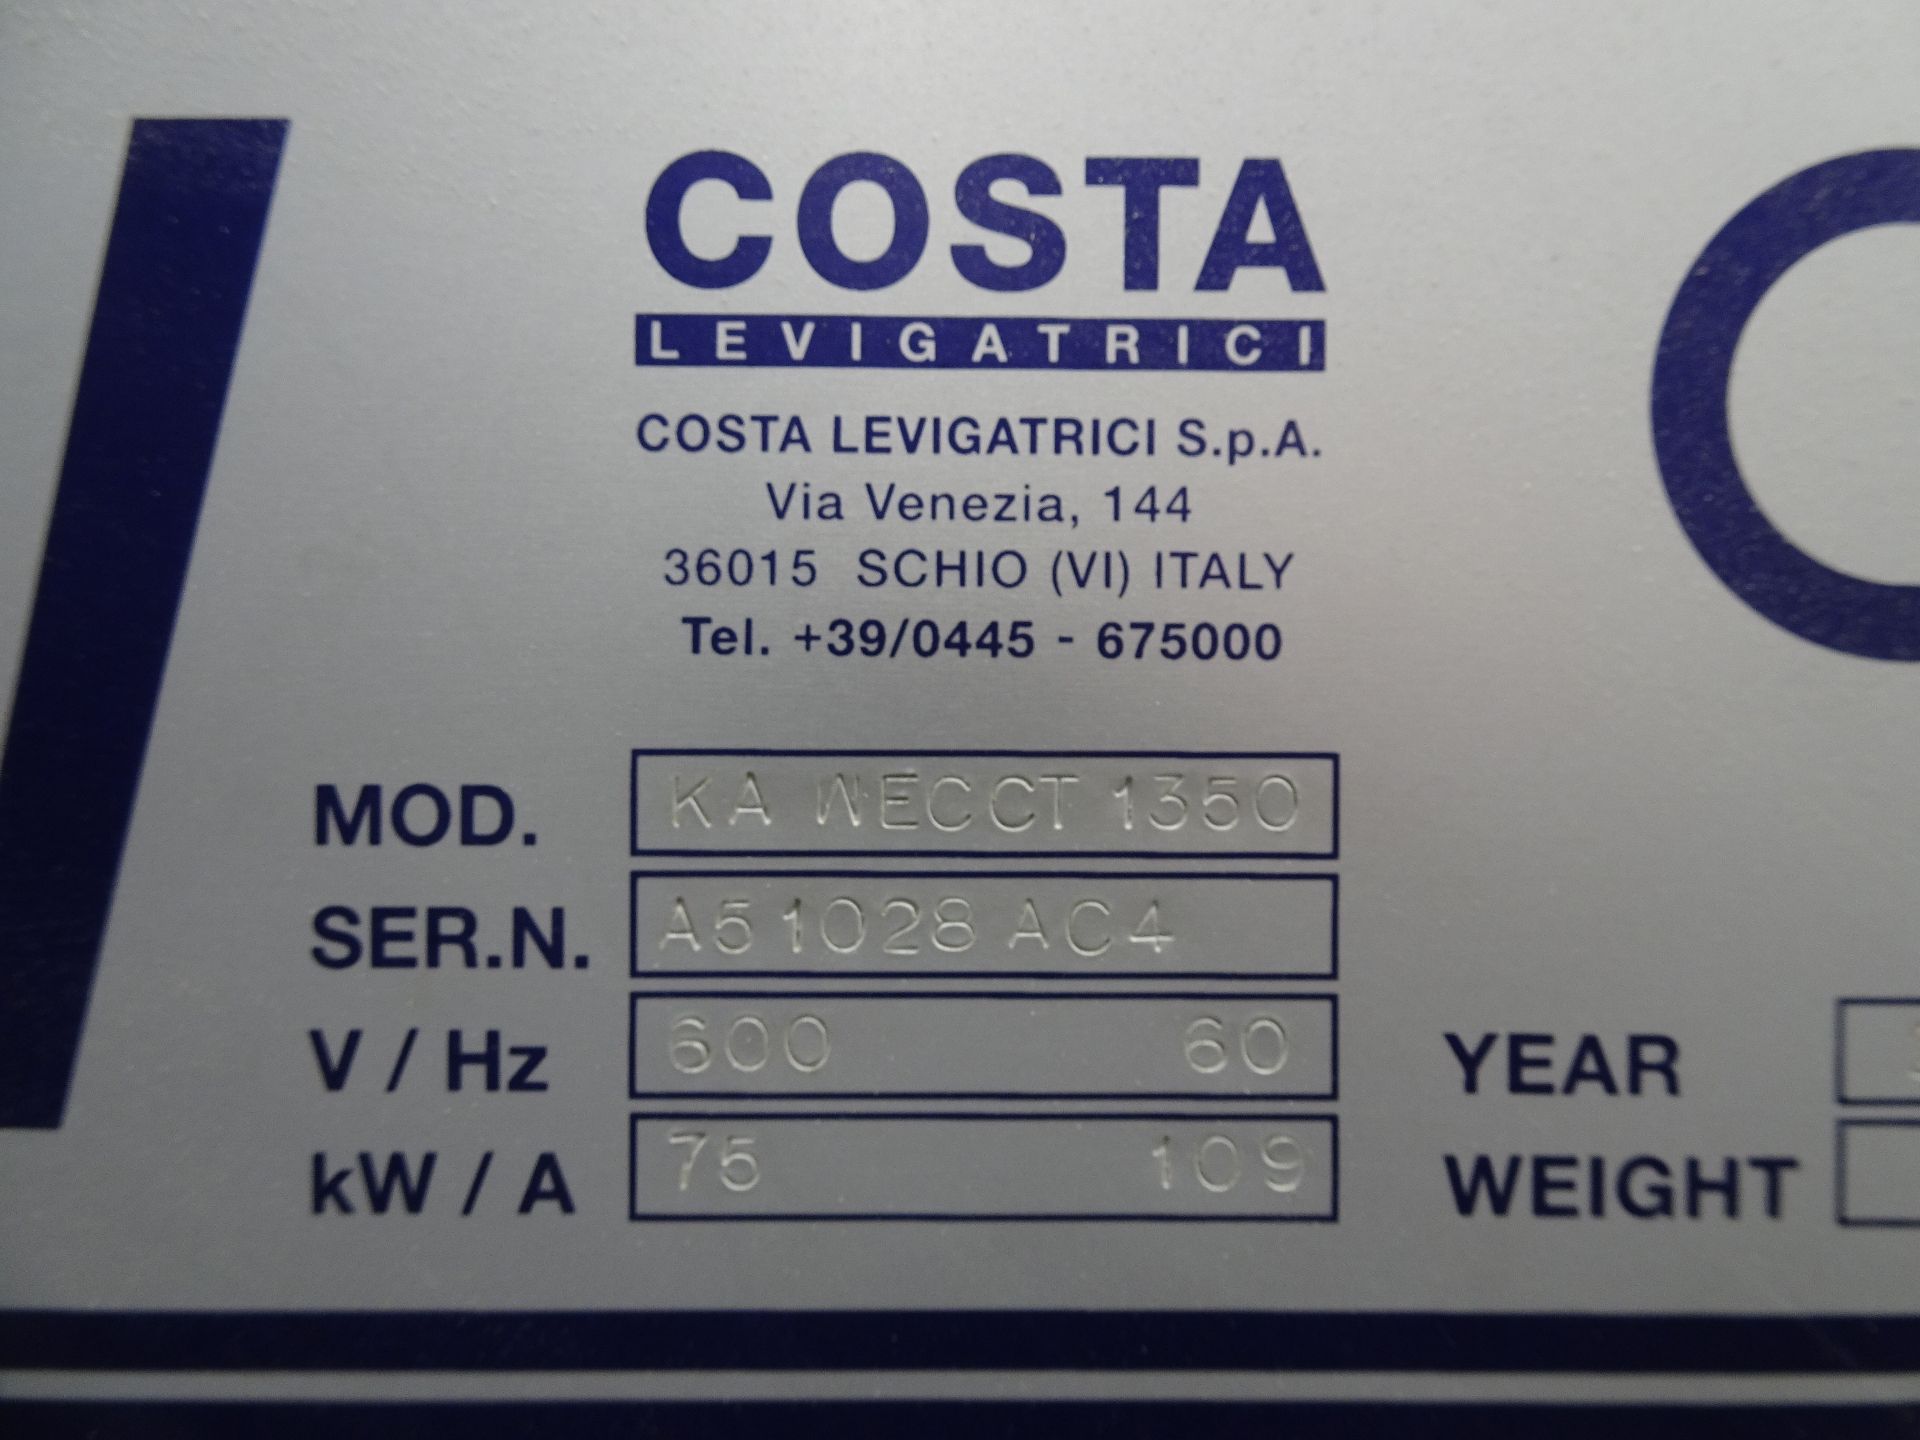 2005 Costa Model KA WECCT-1360 4 Head 52" Planer-Sander - Image 3 of 8